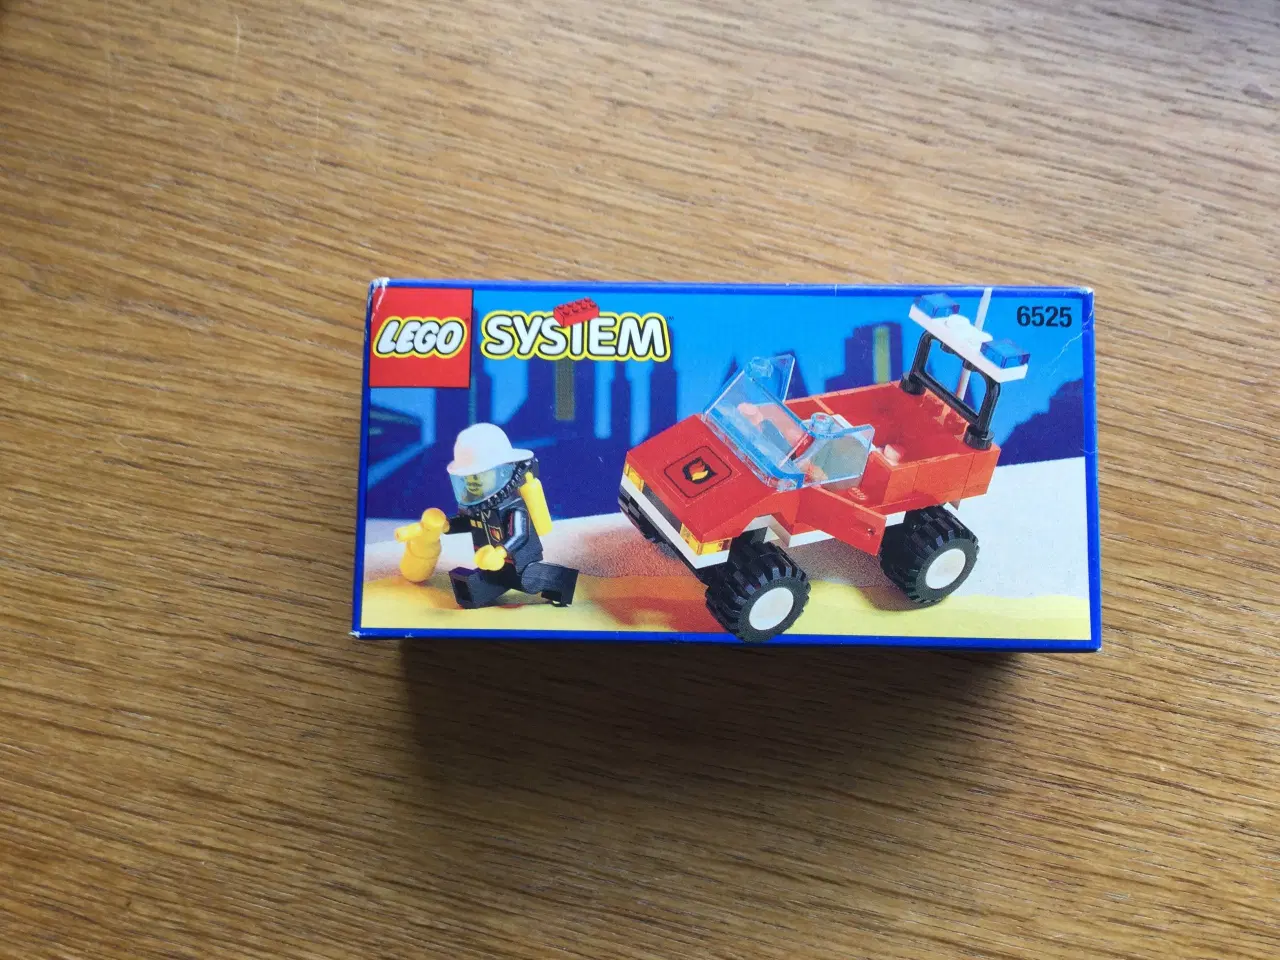 Billede 1 - Lego brand bil